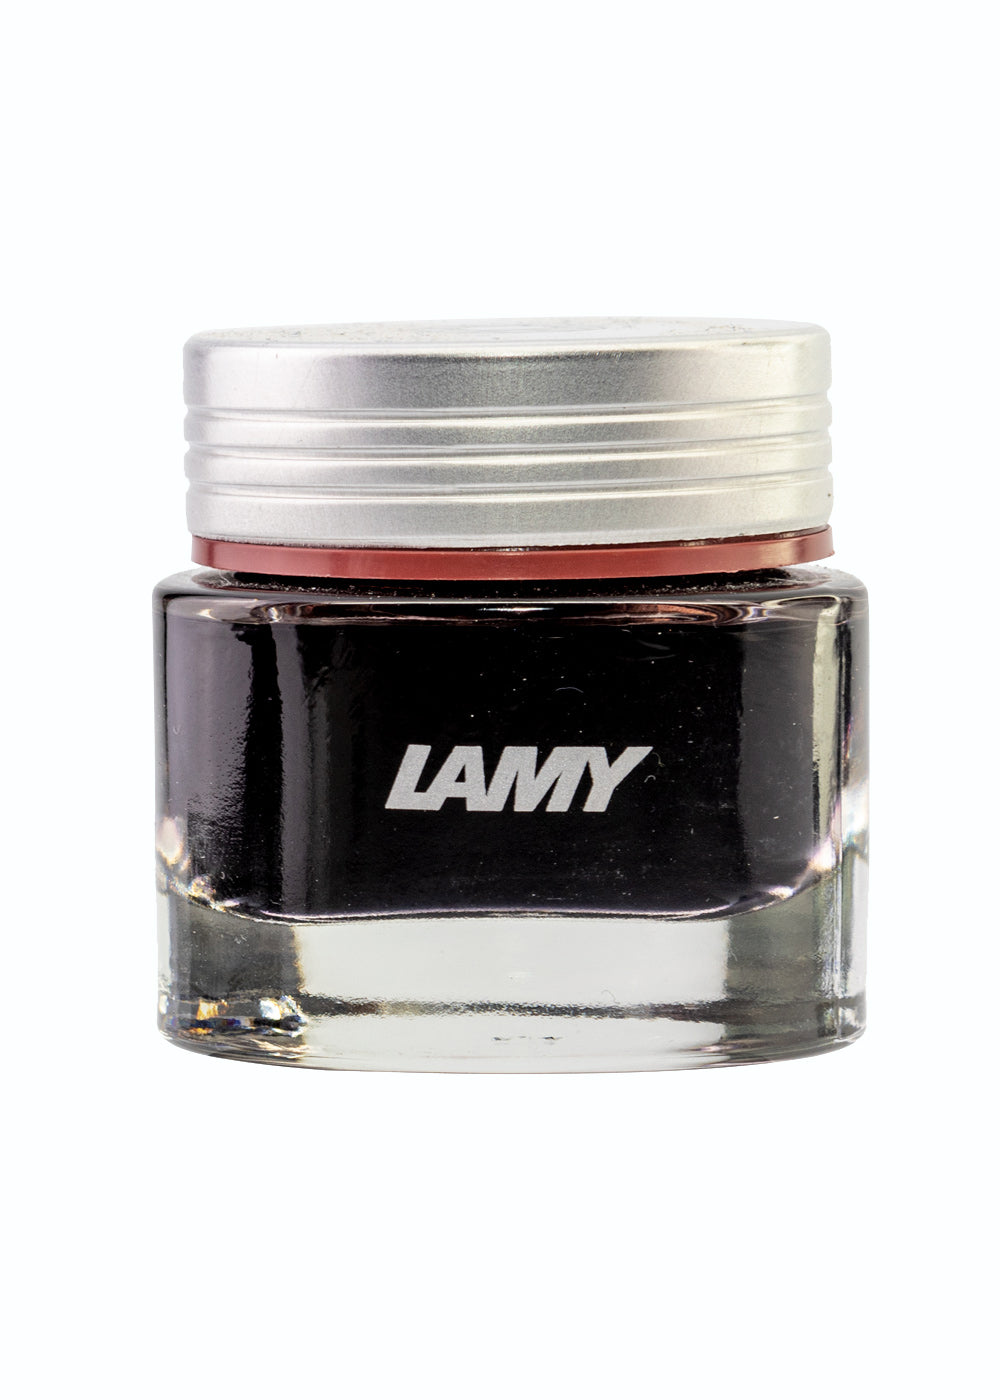 Lamy Crystal Topaz ink